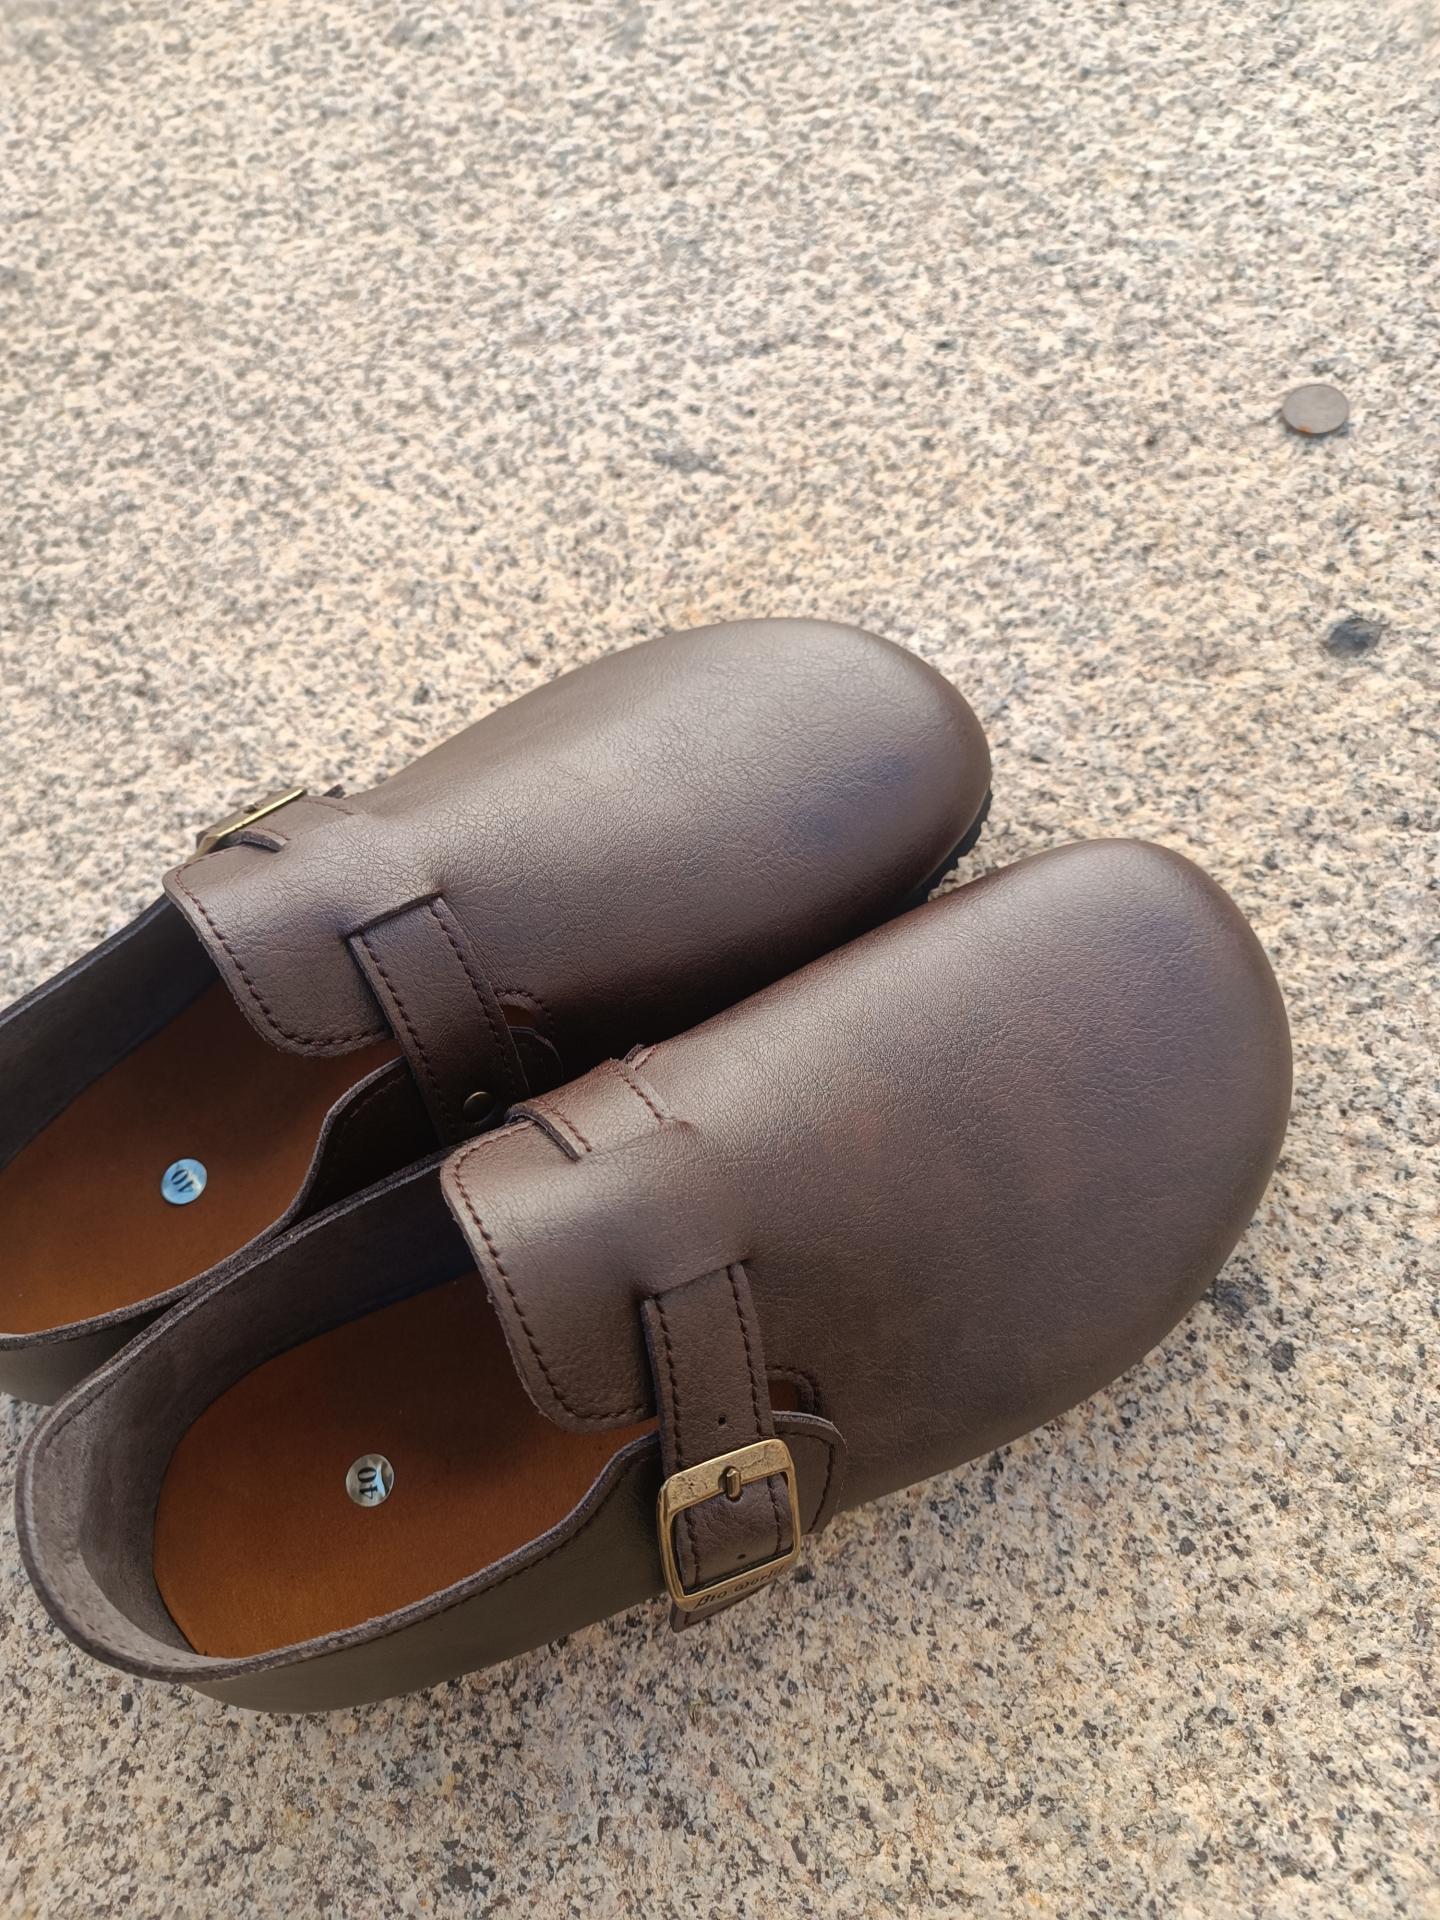 BAREFOOT OSLO Marrón oscuro, suelas Vibram SUPERNEWFLEX​ de 6mm de grosor,  zapatos Barefoot para mujer y hombre, calzado Barefoot, zapato veganos,  eco-friendly, barefoot.: 84,00 € - BIOWORLD SHOES